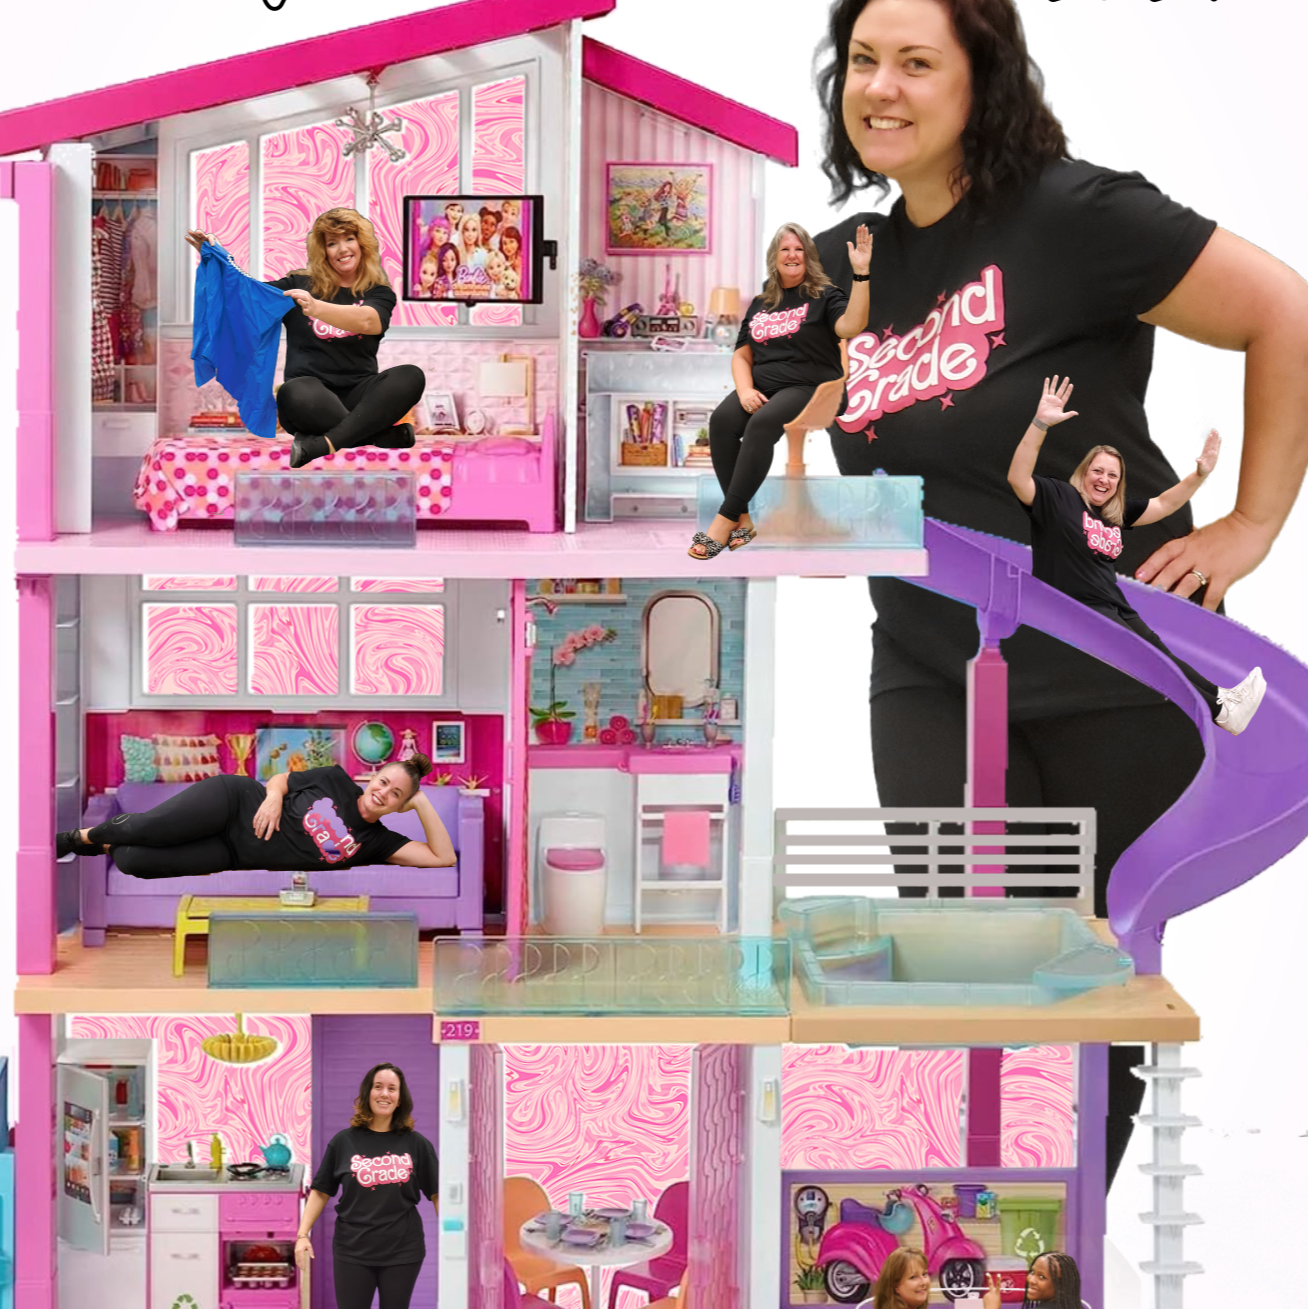 Teachers pose inside a Barbie Dreamhouse